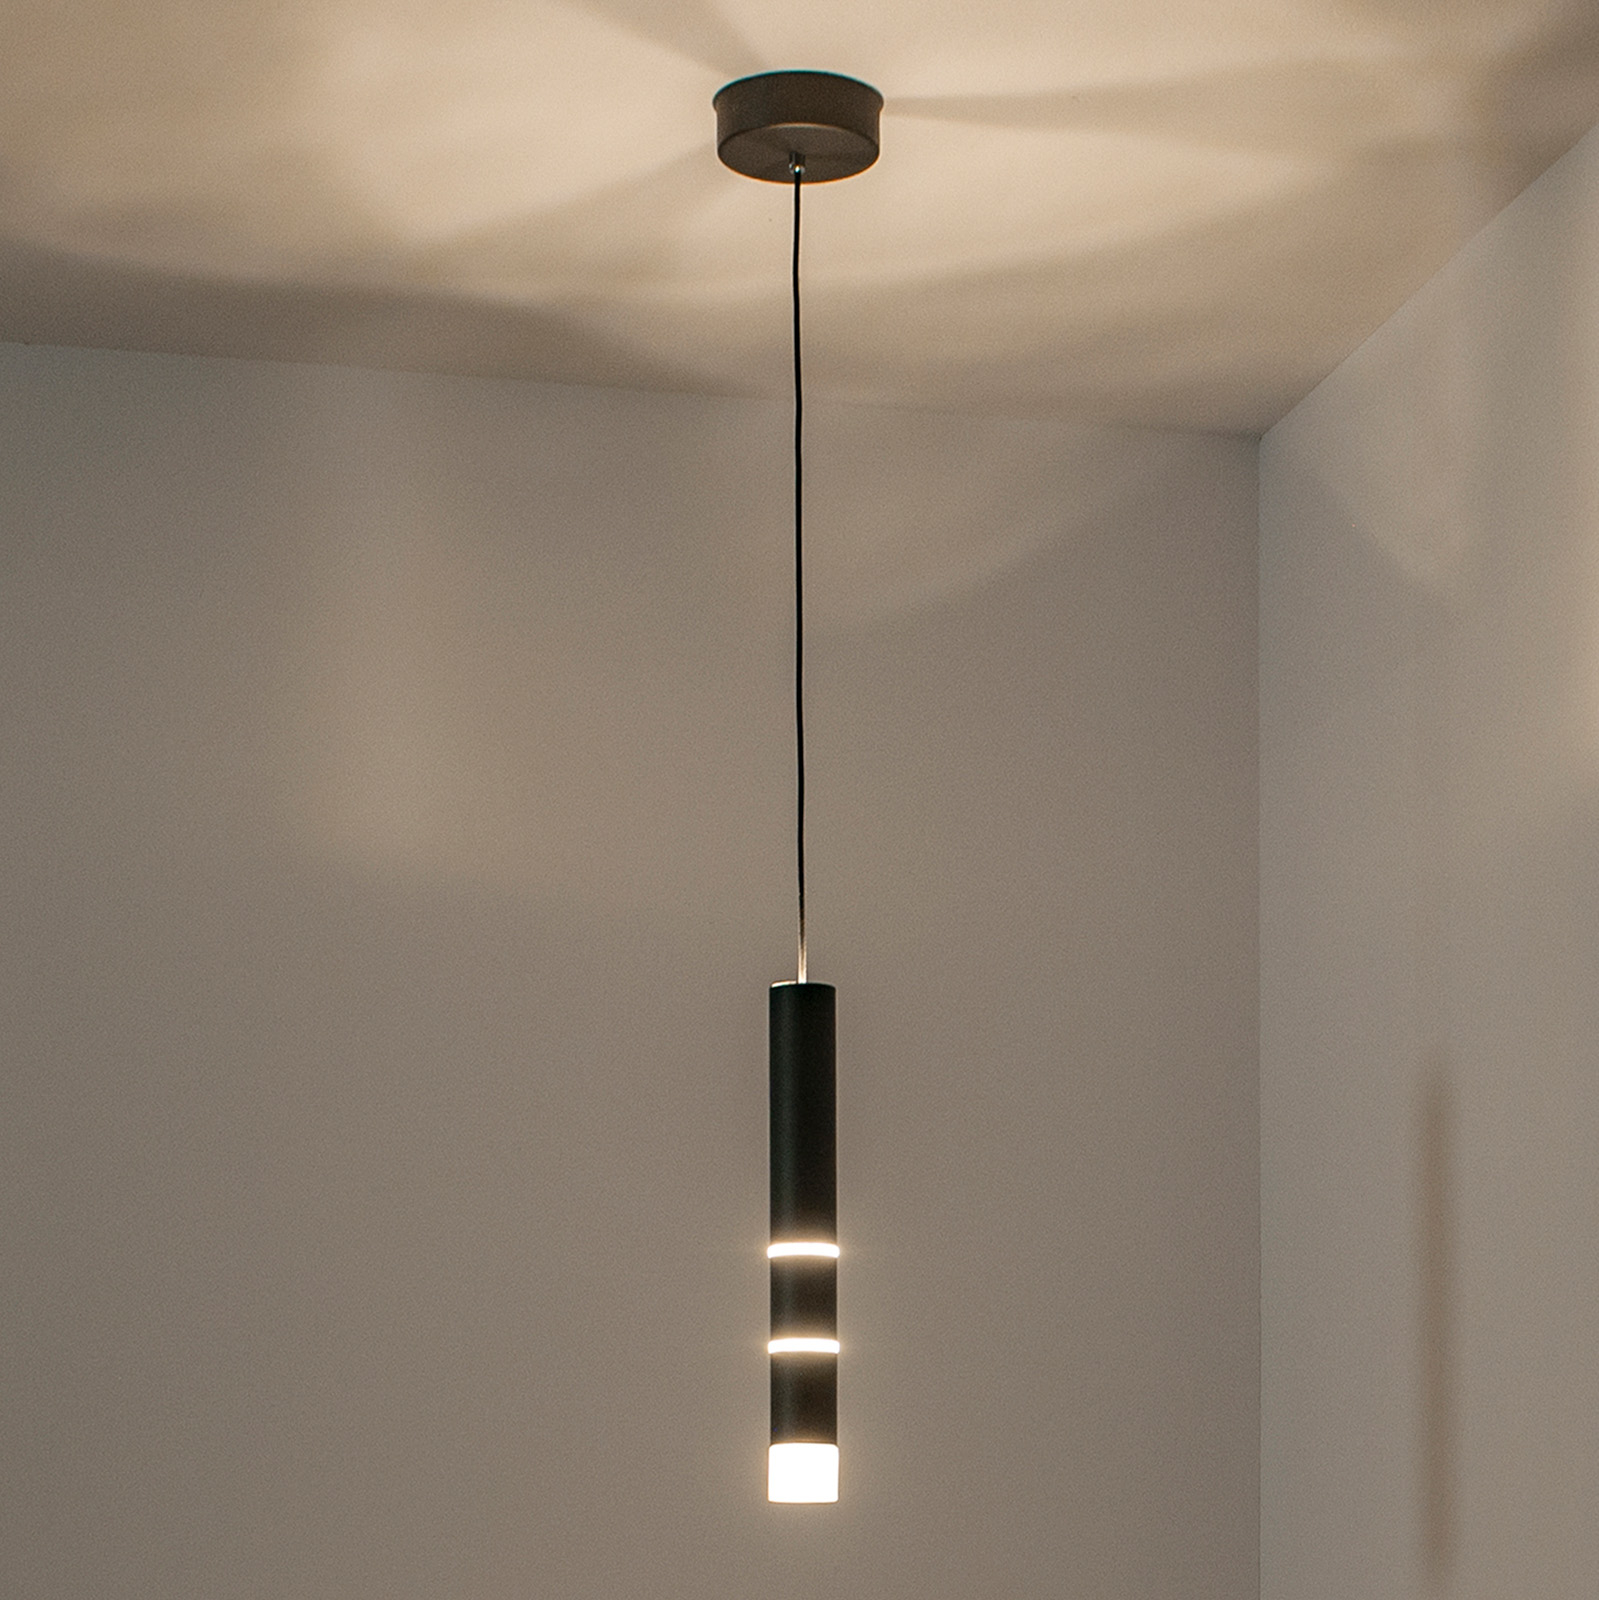 PURE LED hanglamp, een cilinder | Lampen24.nl